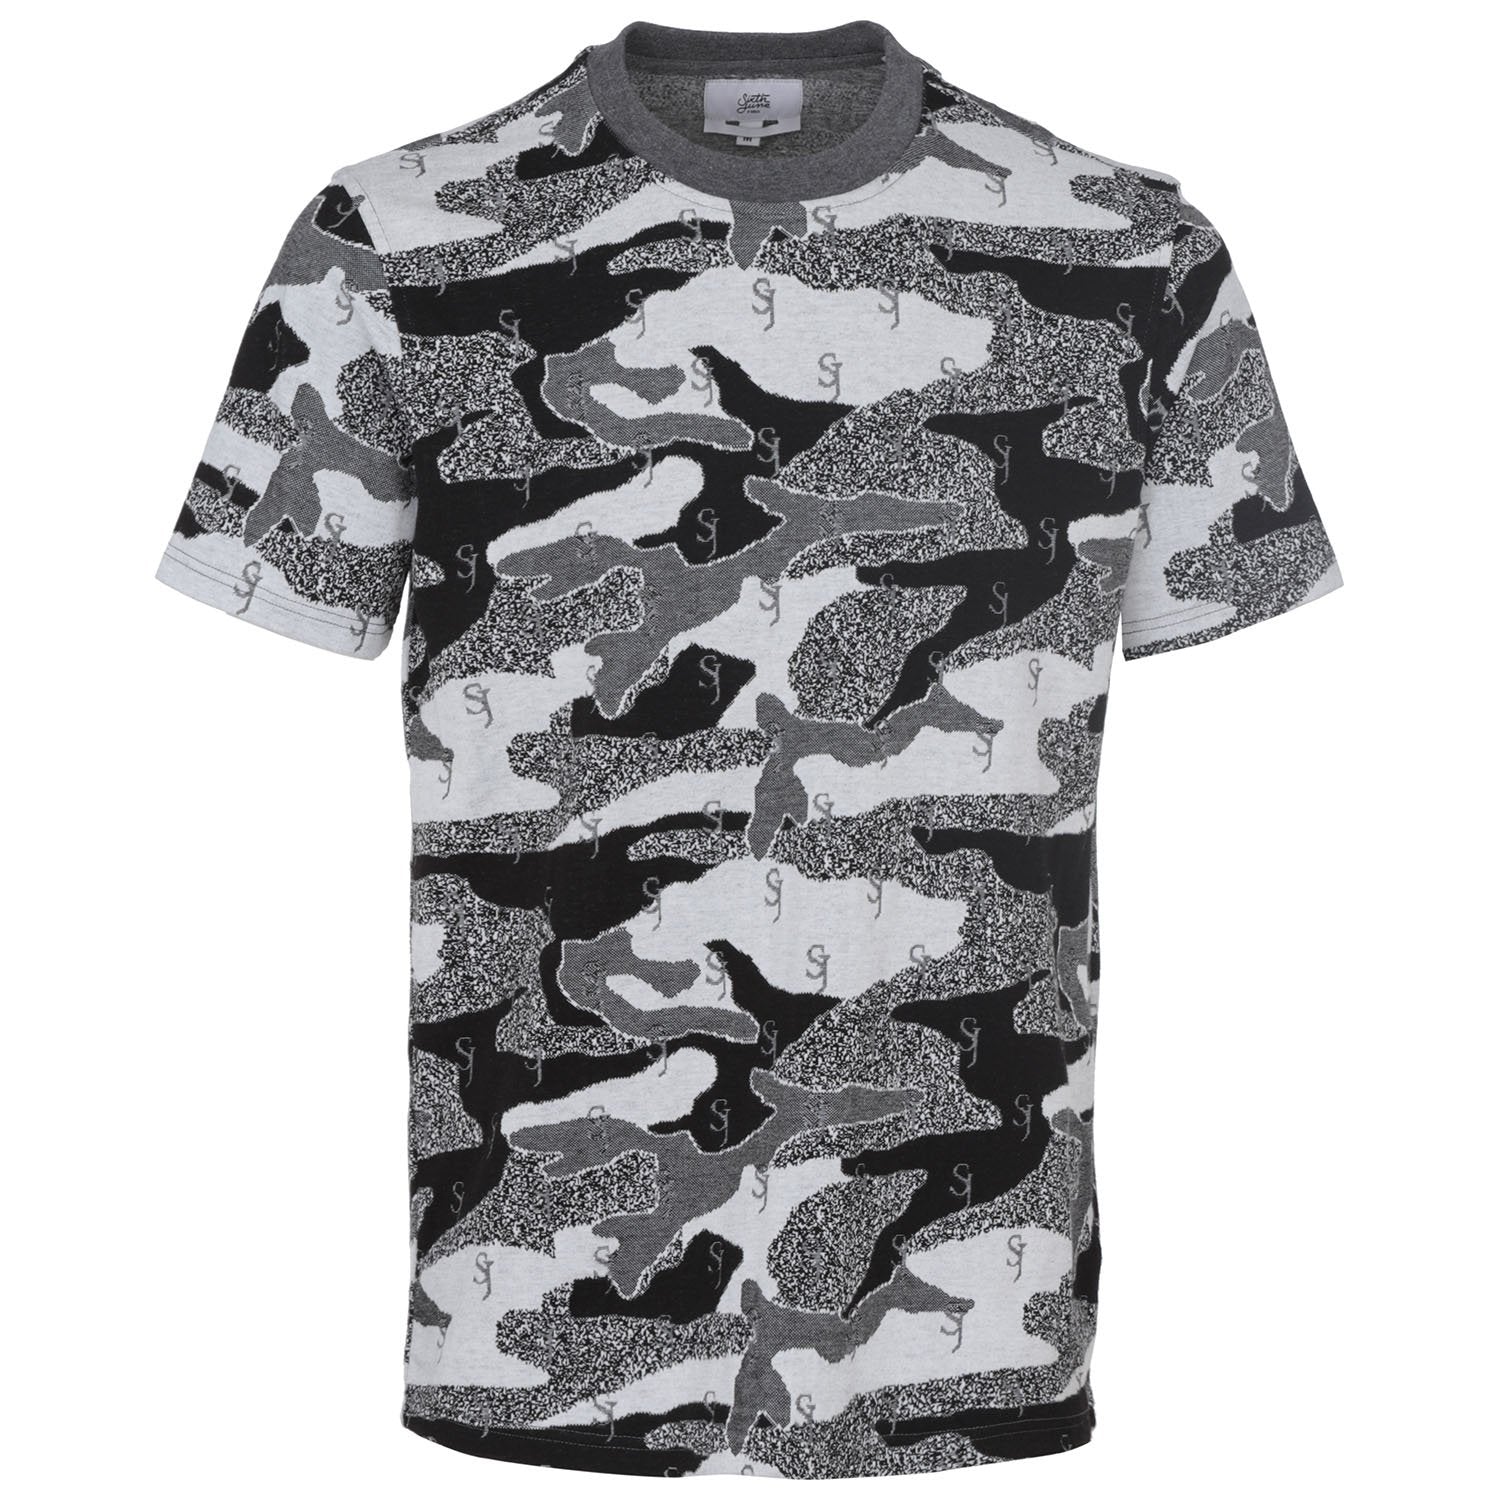 Sixth June - T-shirt jacquard camouflage logo Noir